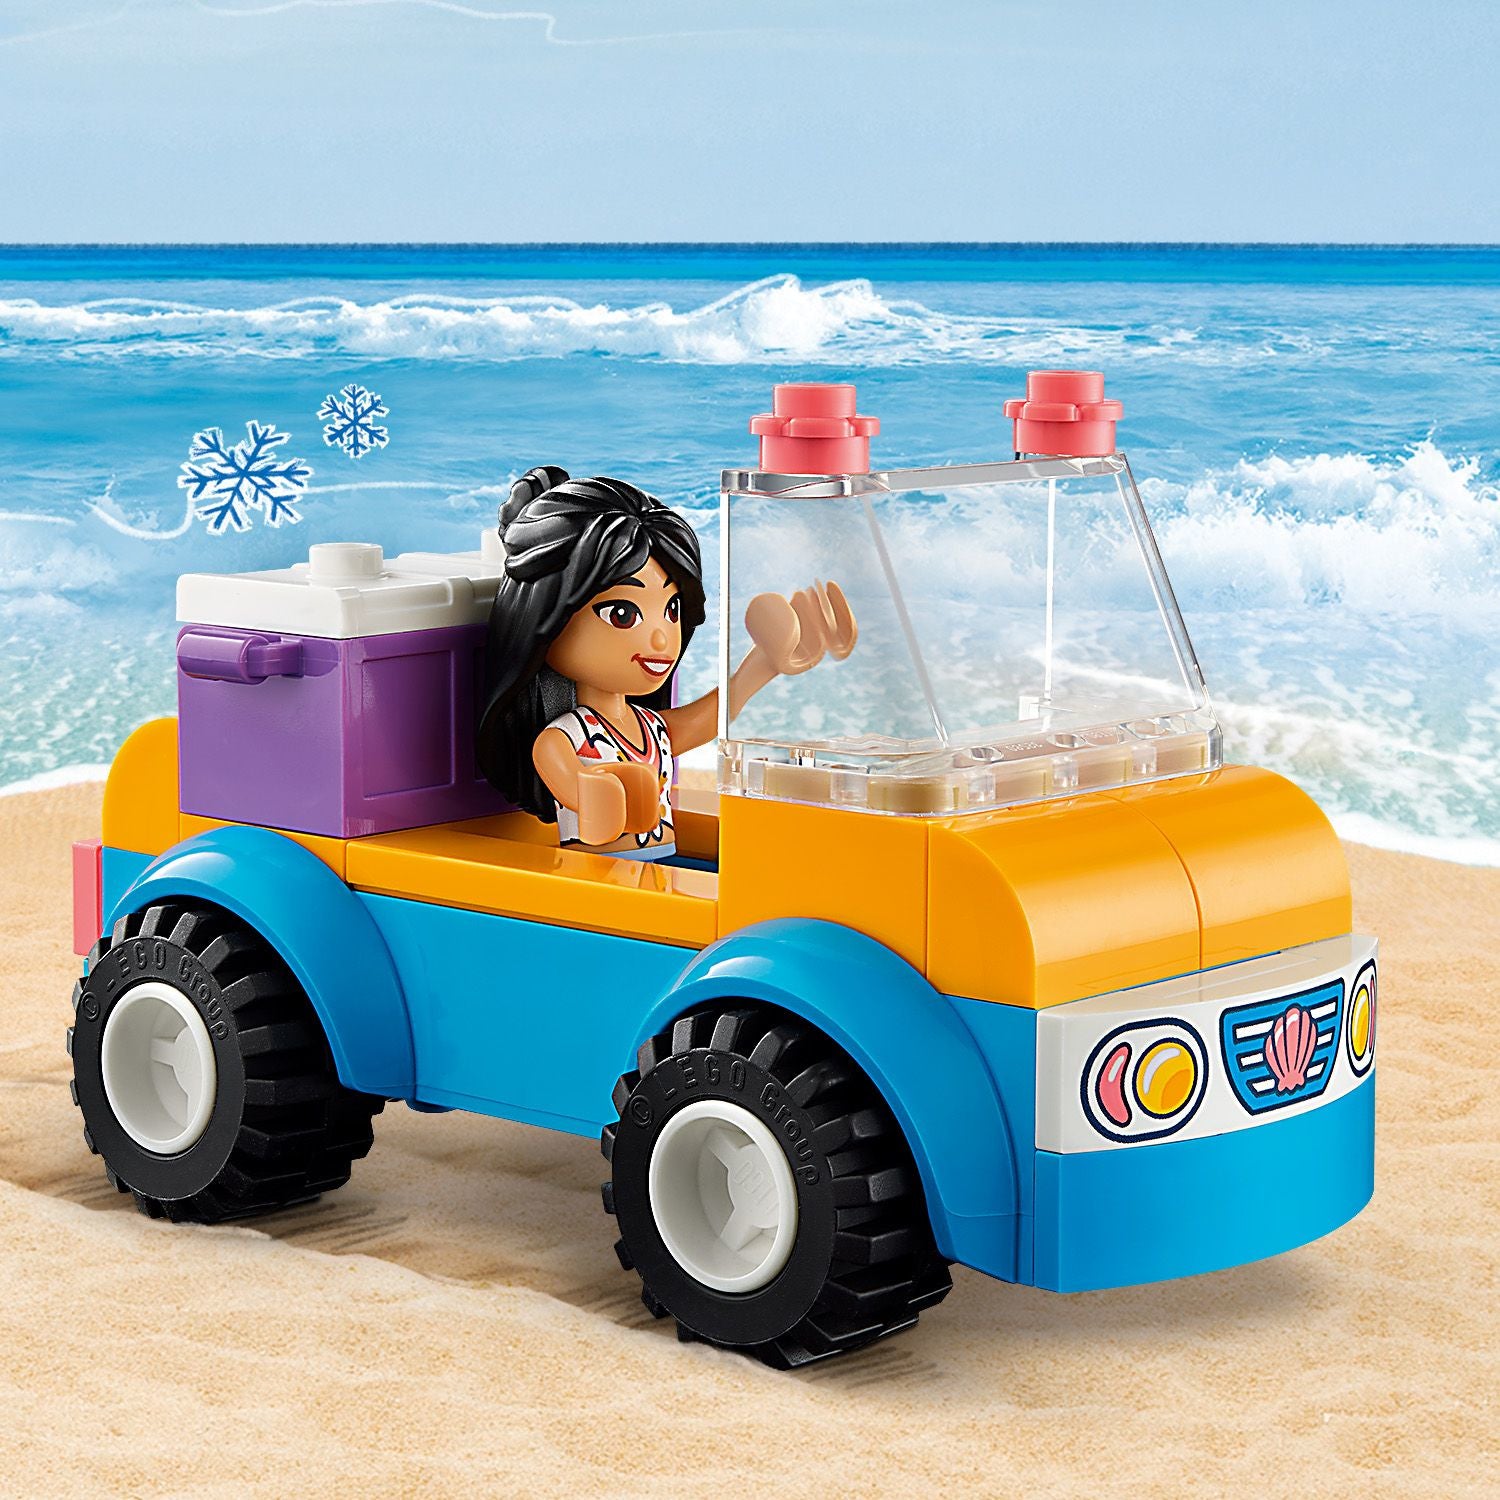 41725 - LEGO Friends - Divertimento sul beach buggy